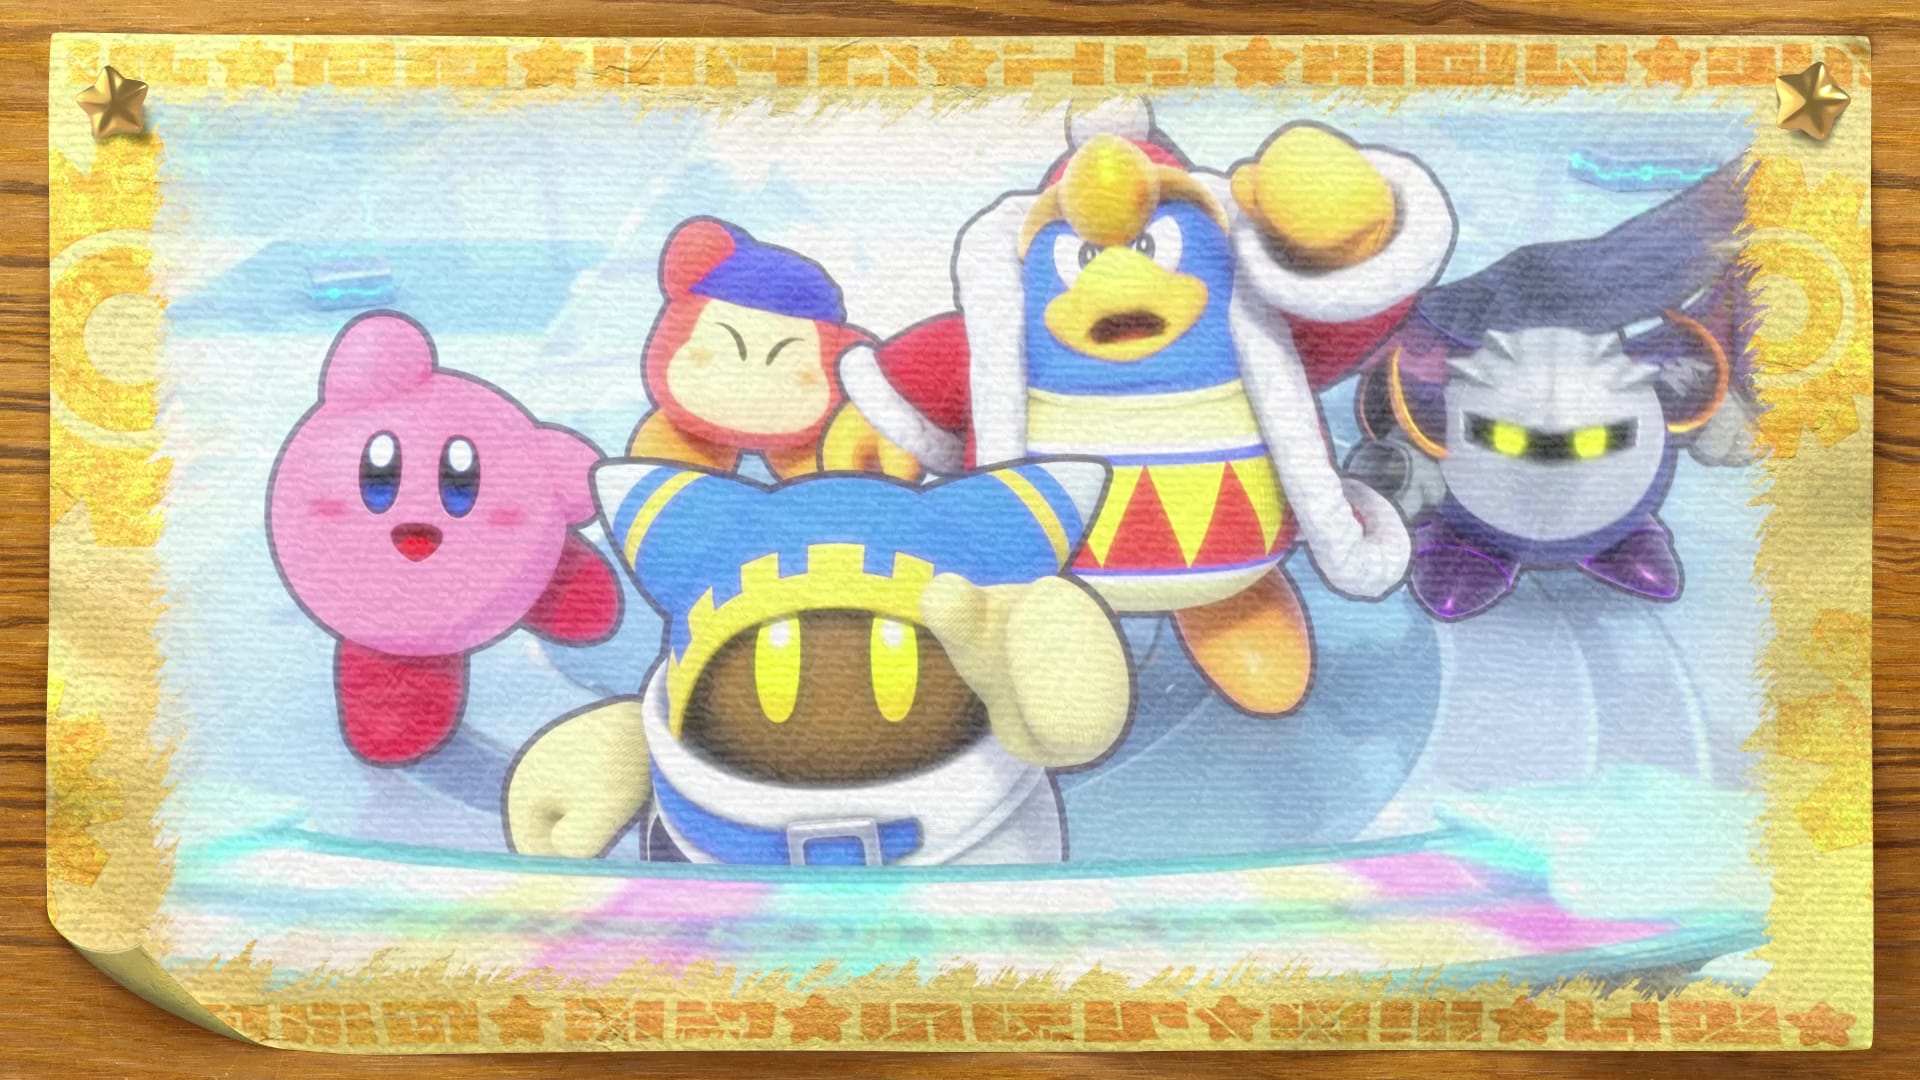 Kirby's Return to Dream Land Deluxe Screenshot